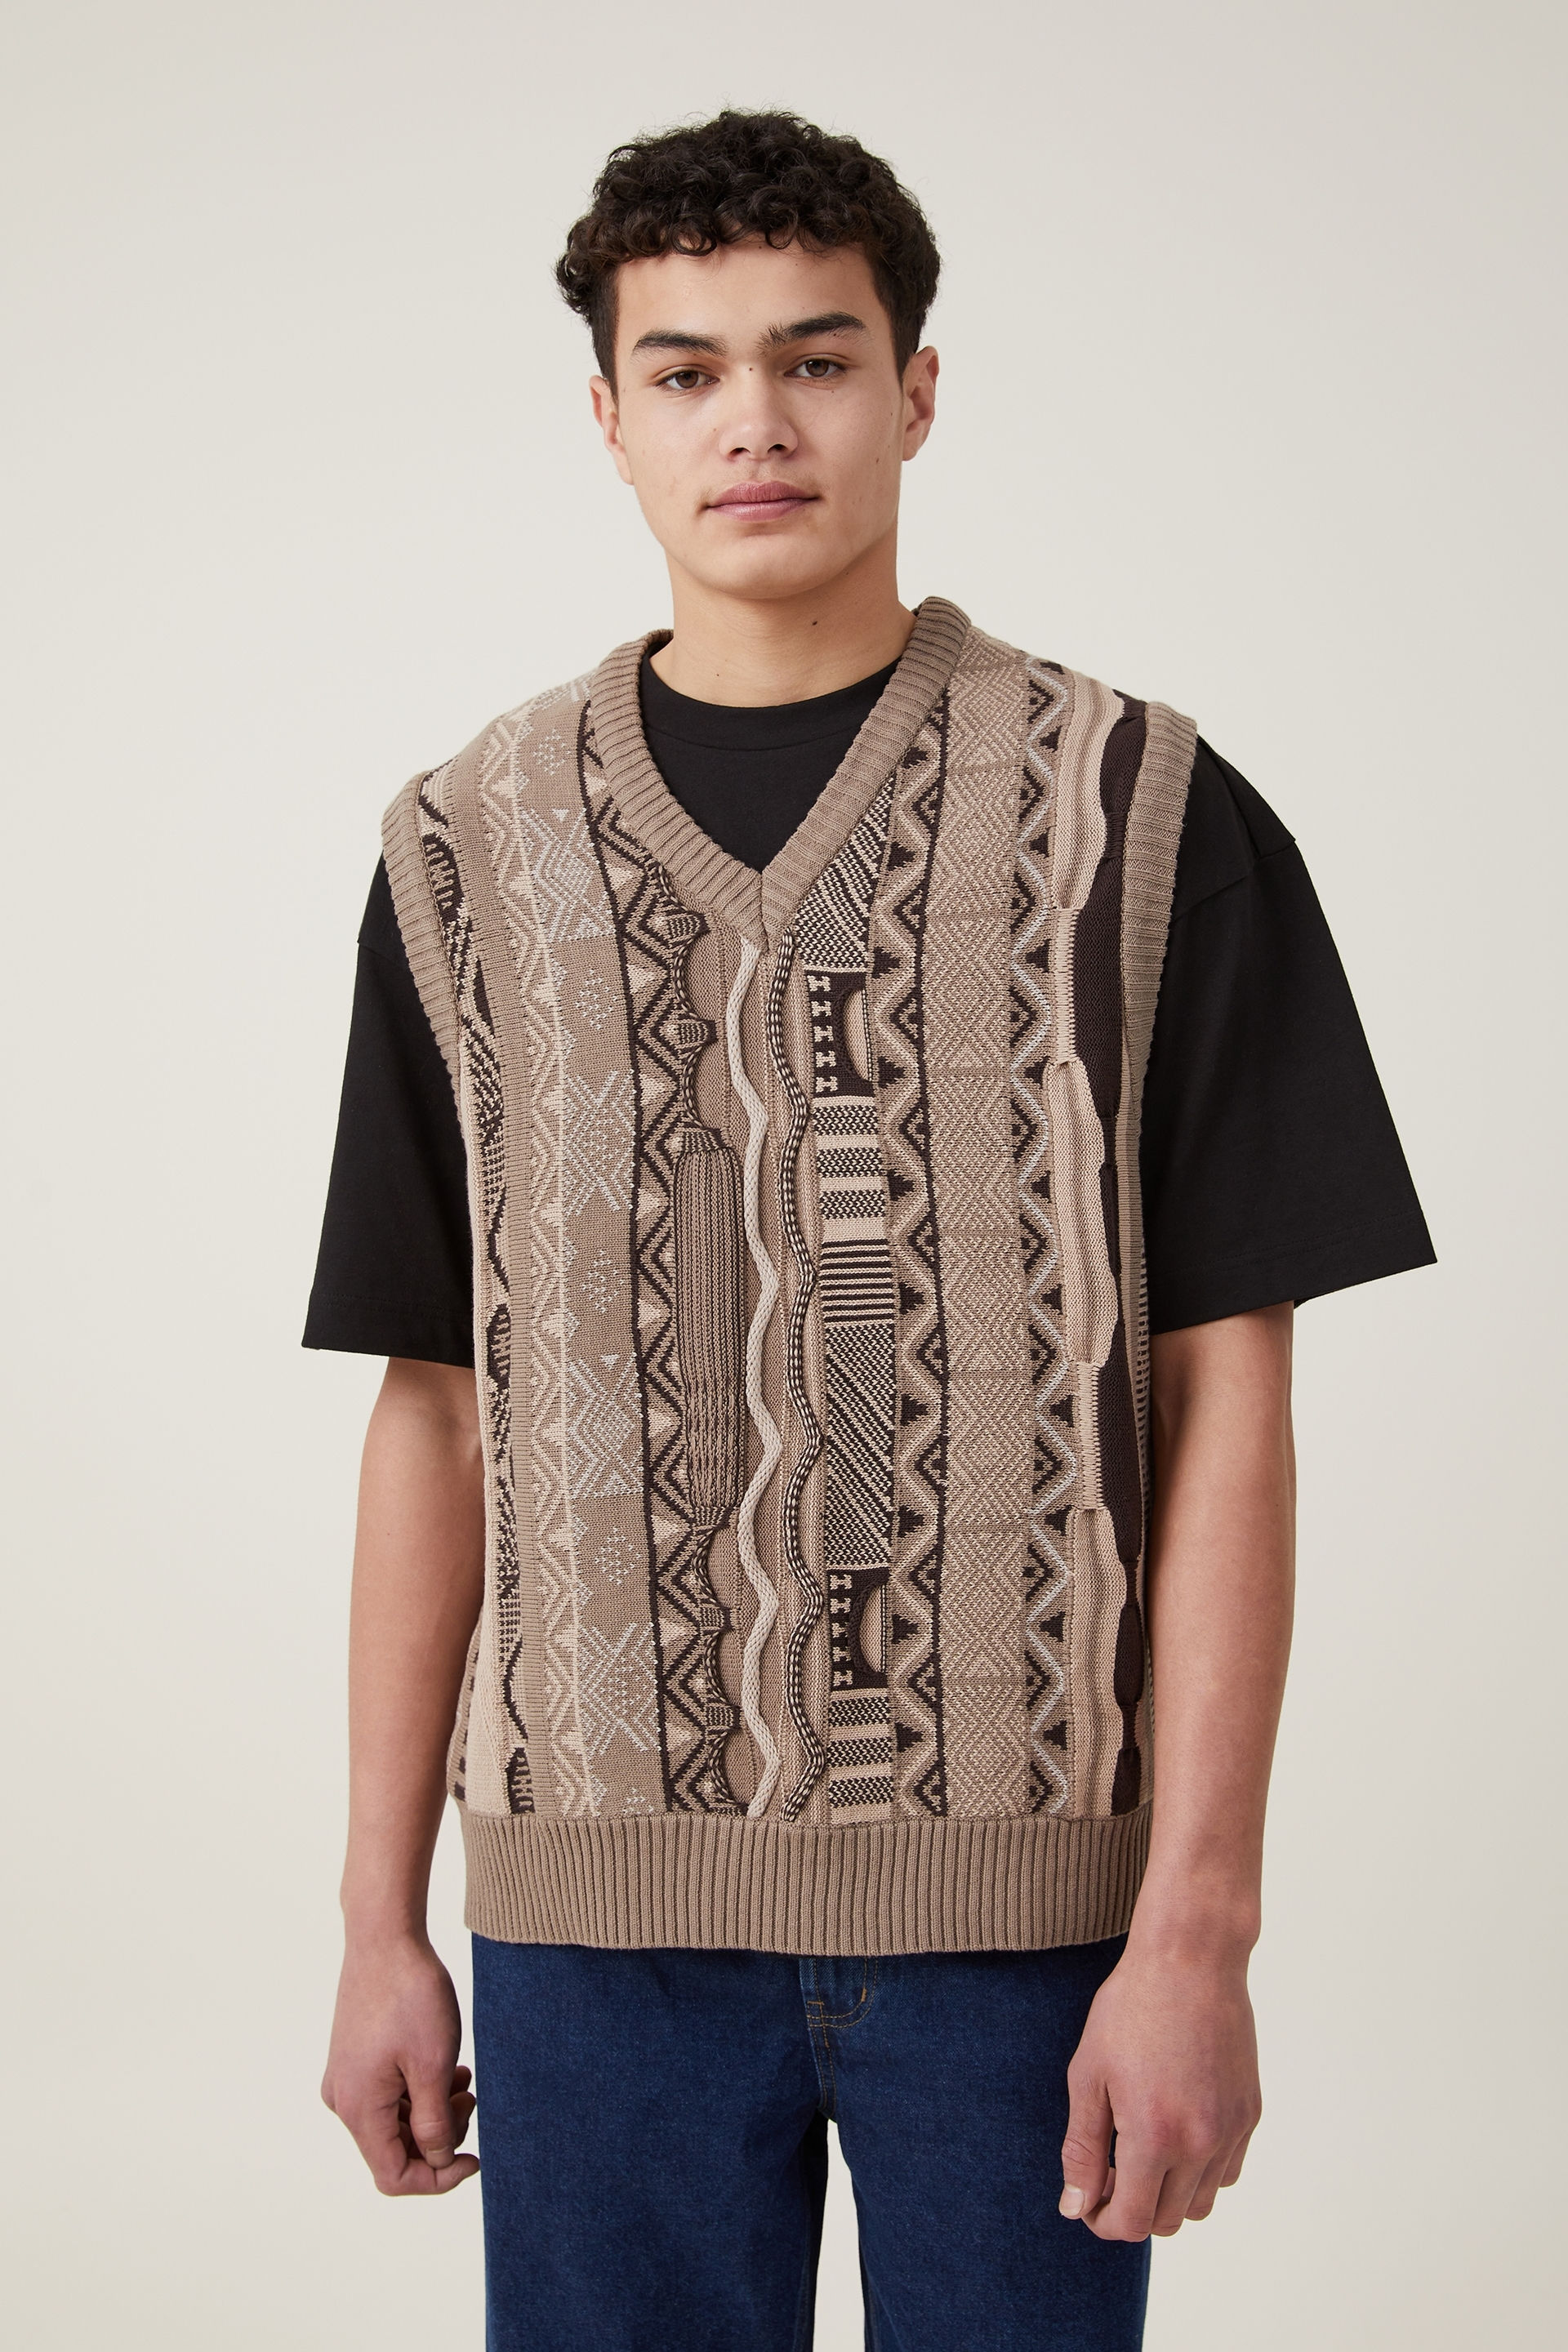 Cotton On Men - Vintage Knit Vest - Natural pattern